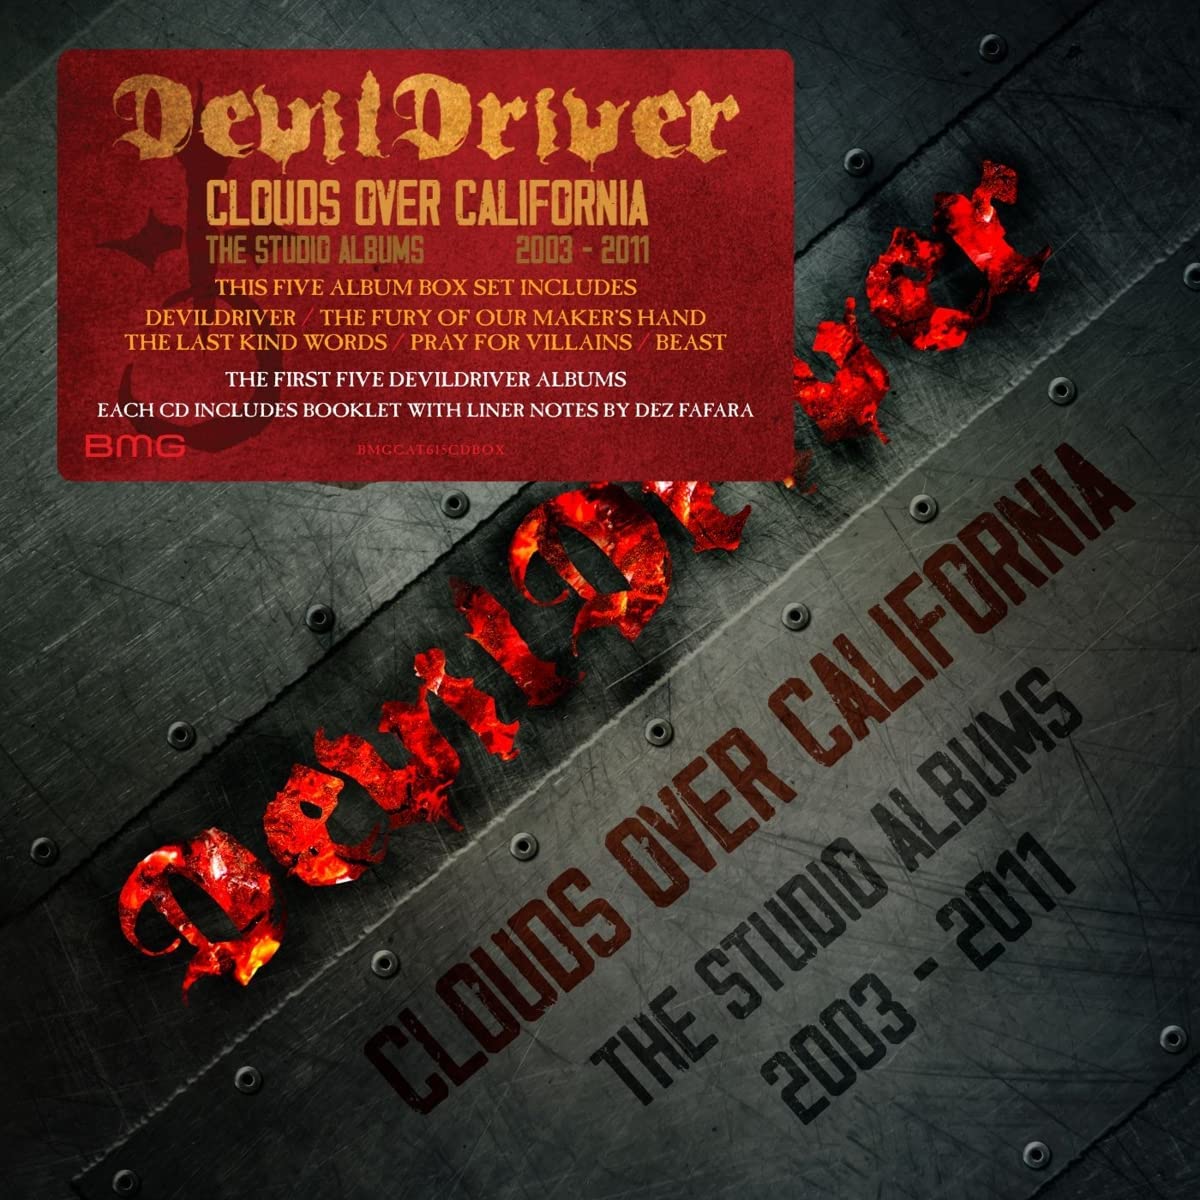 DevilDriver "Clouds Over California: The Studio Albums 2003-2011" 5 CD Box Set